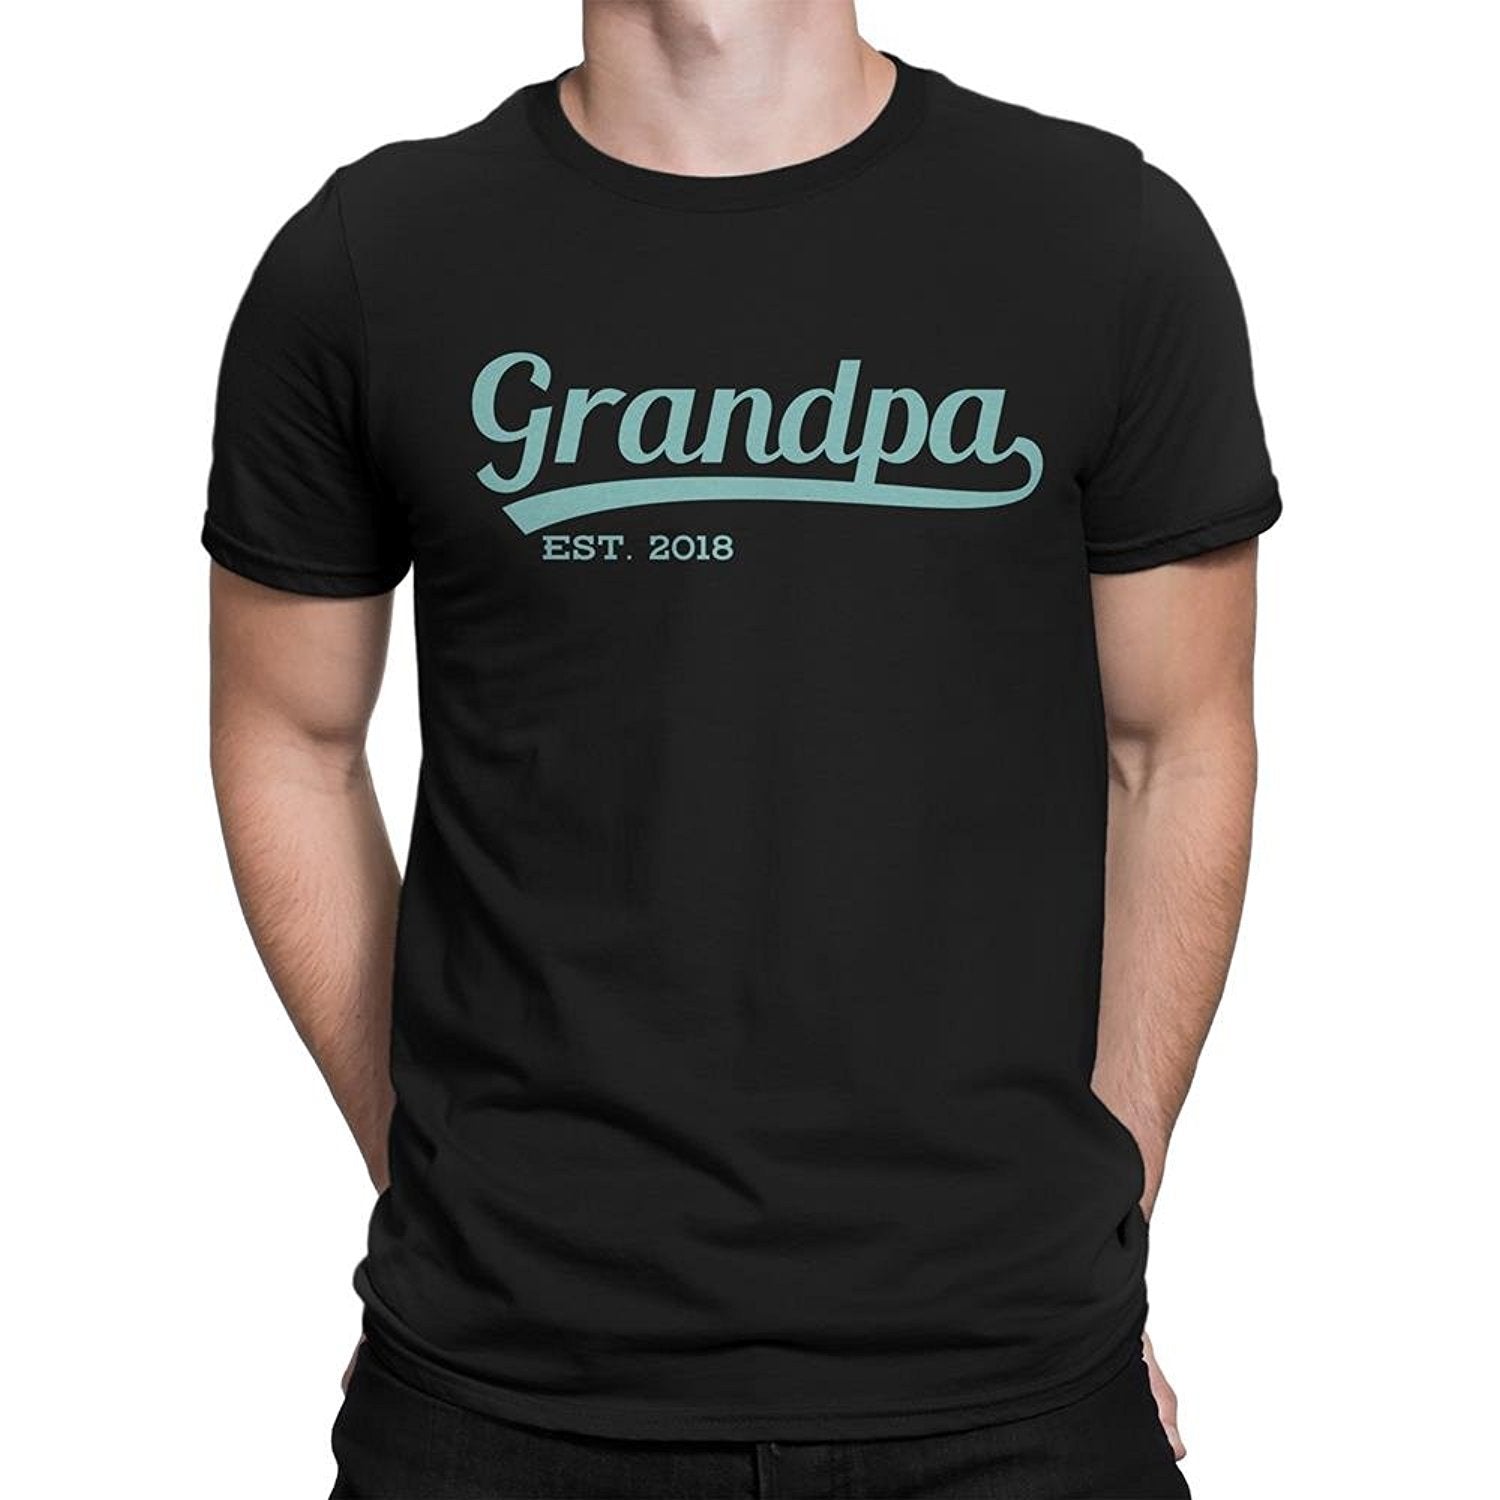 Grandpa Tee Established 2018 Grandfather 1 2018 Charcoal